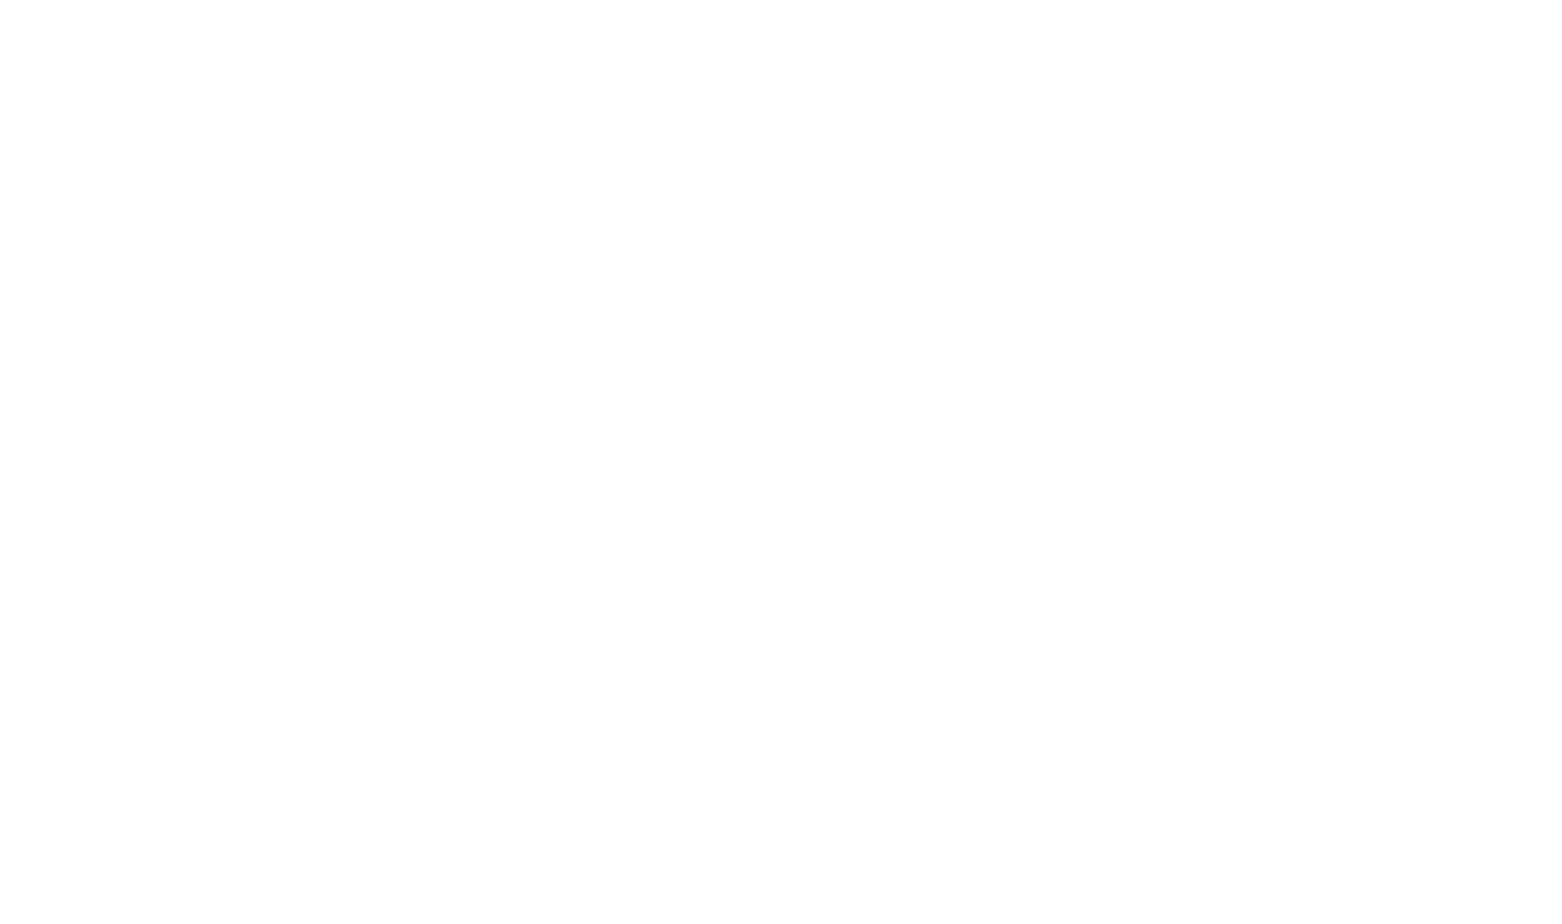 PSP Swiss Property logo large for dark backgrounds (transparent PNG)